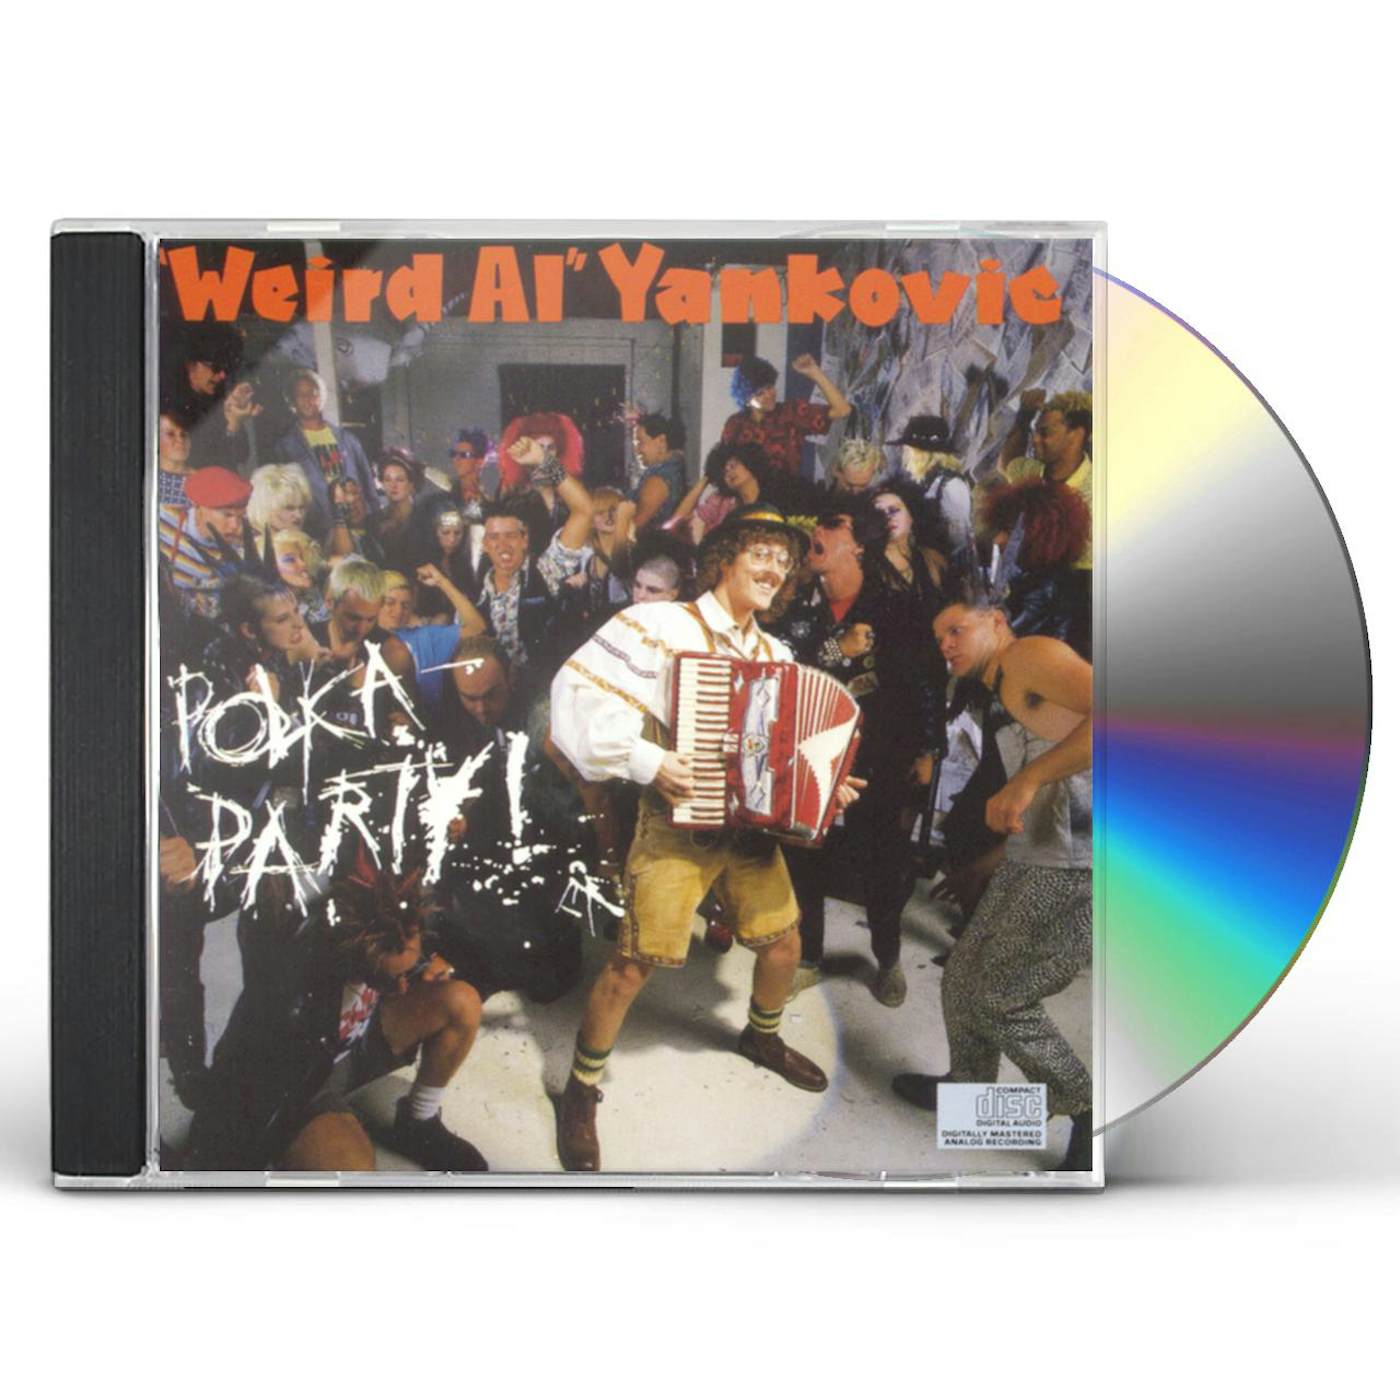 "Weird Al" Yankovic POLKA PARTY CD